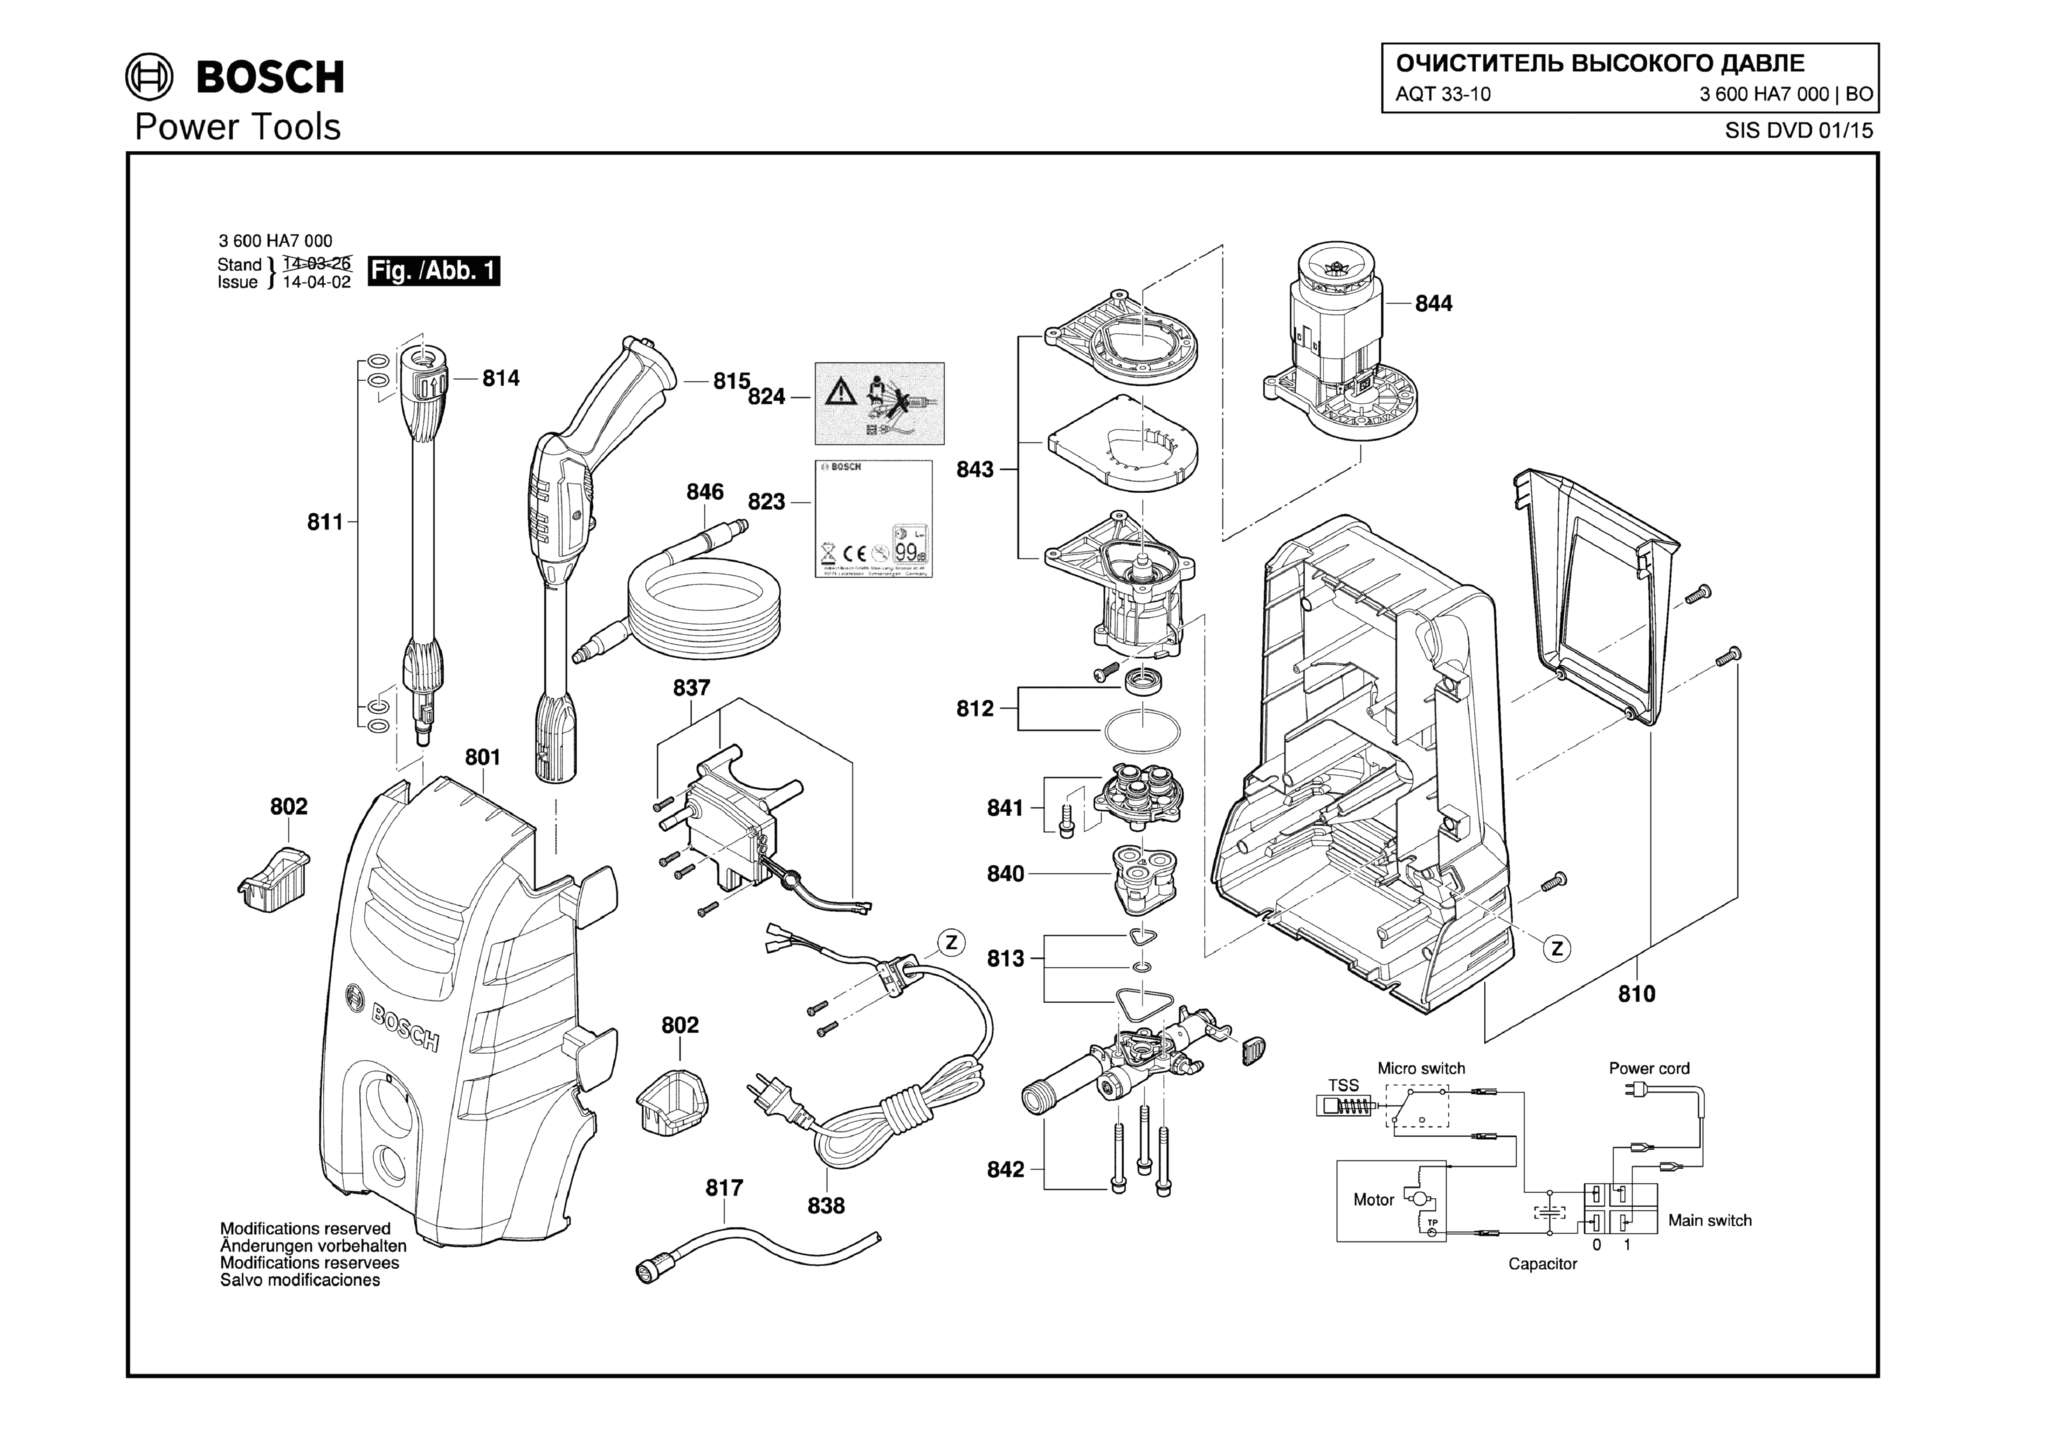 Запчасти, схема и деталировка Bosch AQT 33-10 (ТИП 3600HA7000)